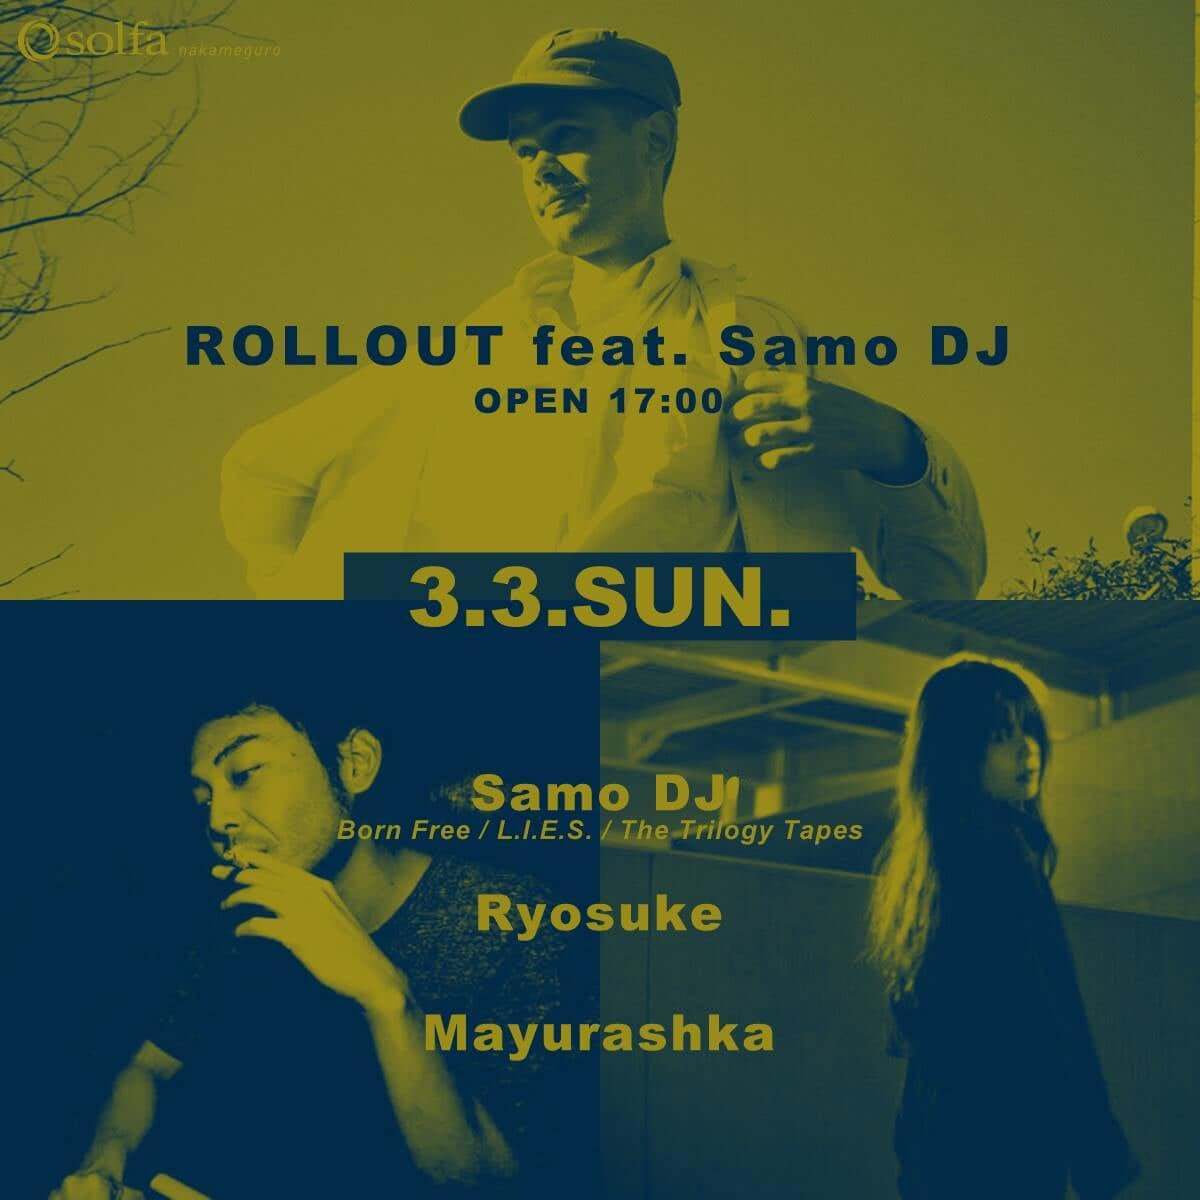 Samo DJが来日！Mayurashka、DJ No Guarantee（CYK）らも出演する「ROLLOUT」が中目黒solfaにて開催 music190222-rollout-feat-samo-dj-3-1200x1200